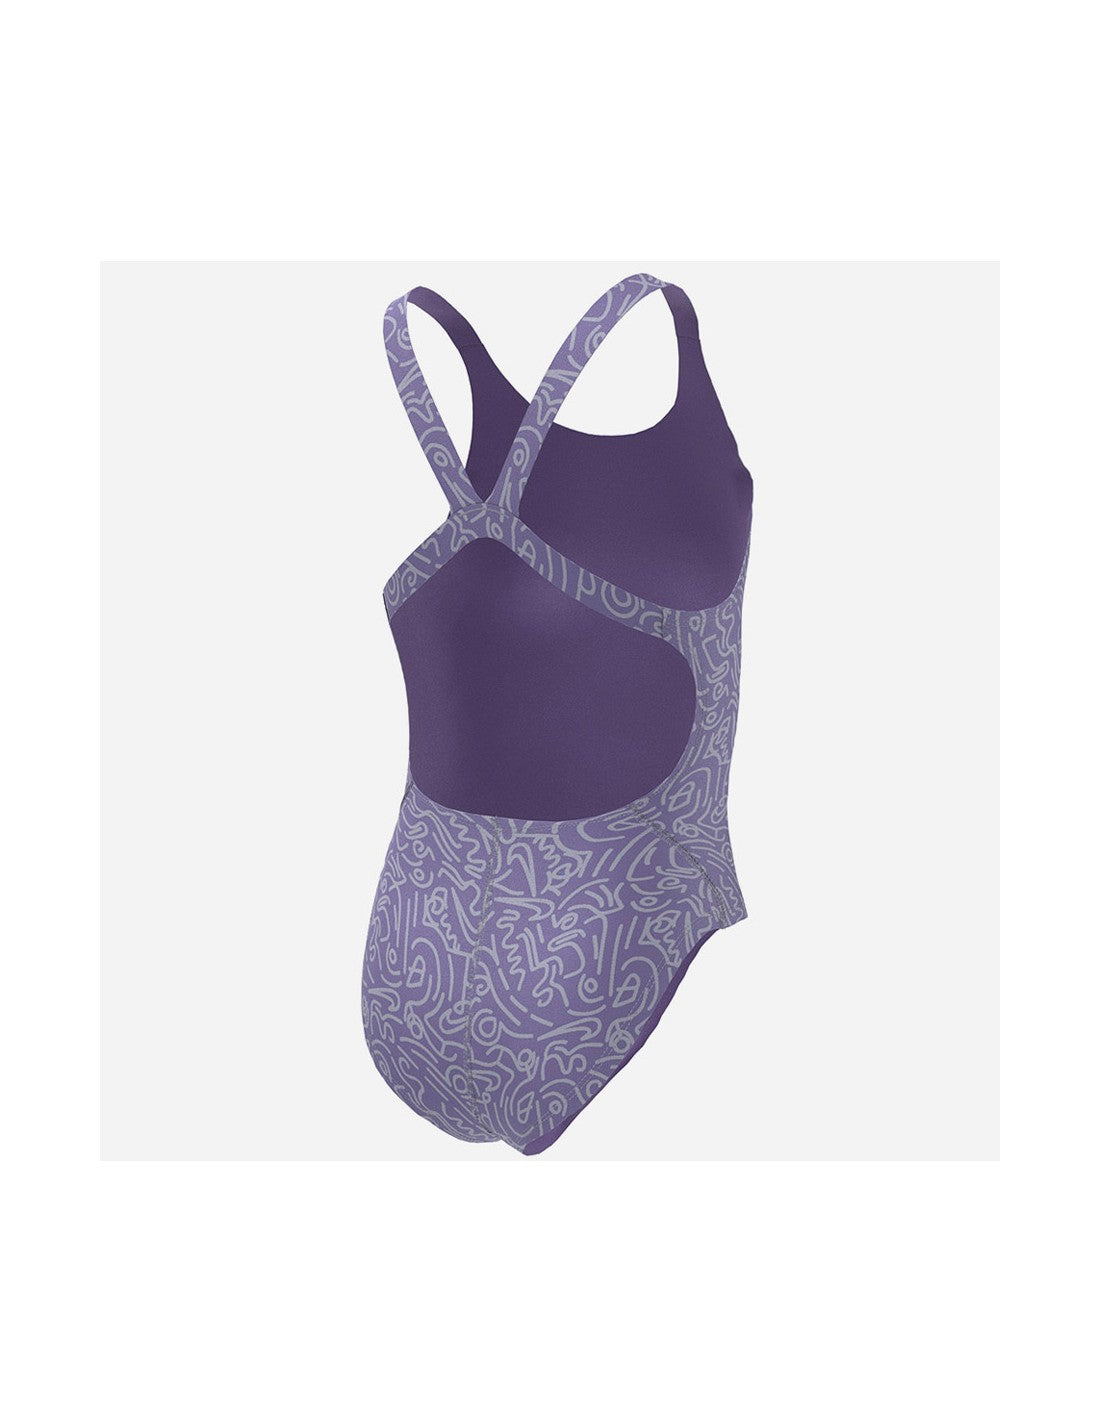 Nike Swim, Hydrastrong Multi Print Badeanzug, Kinder, violett/gemustert